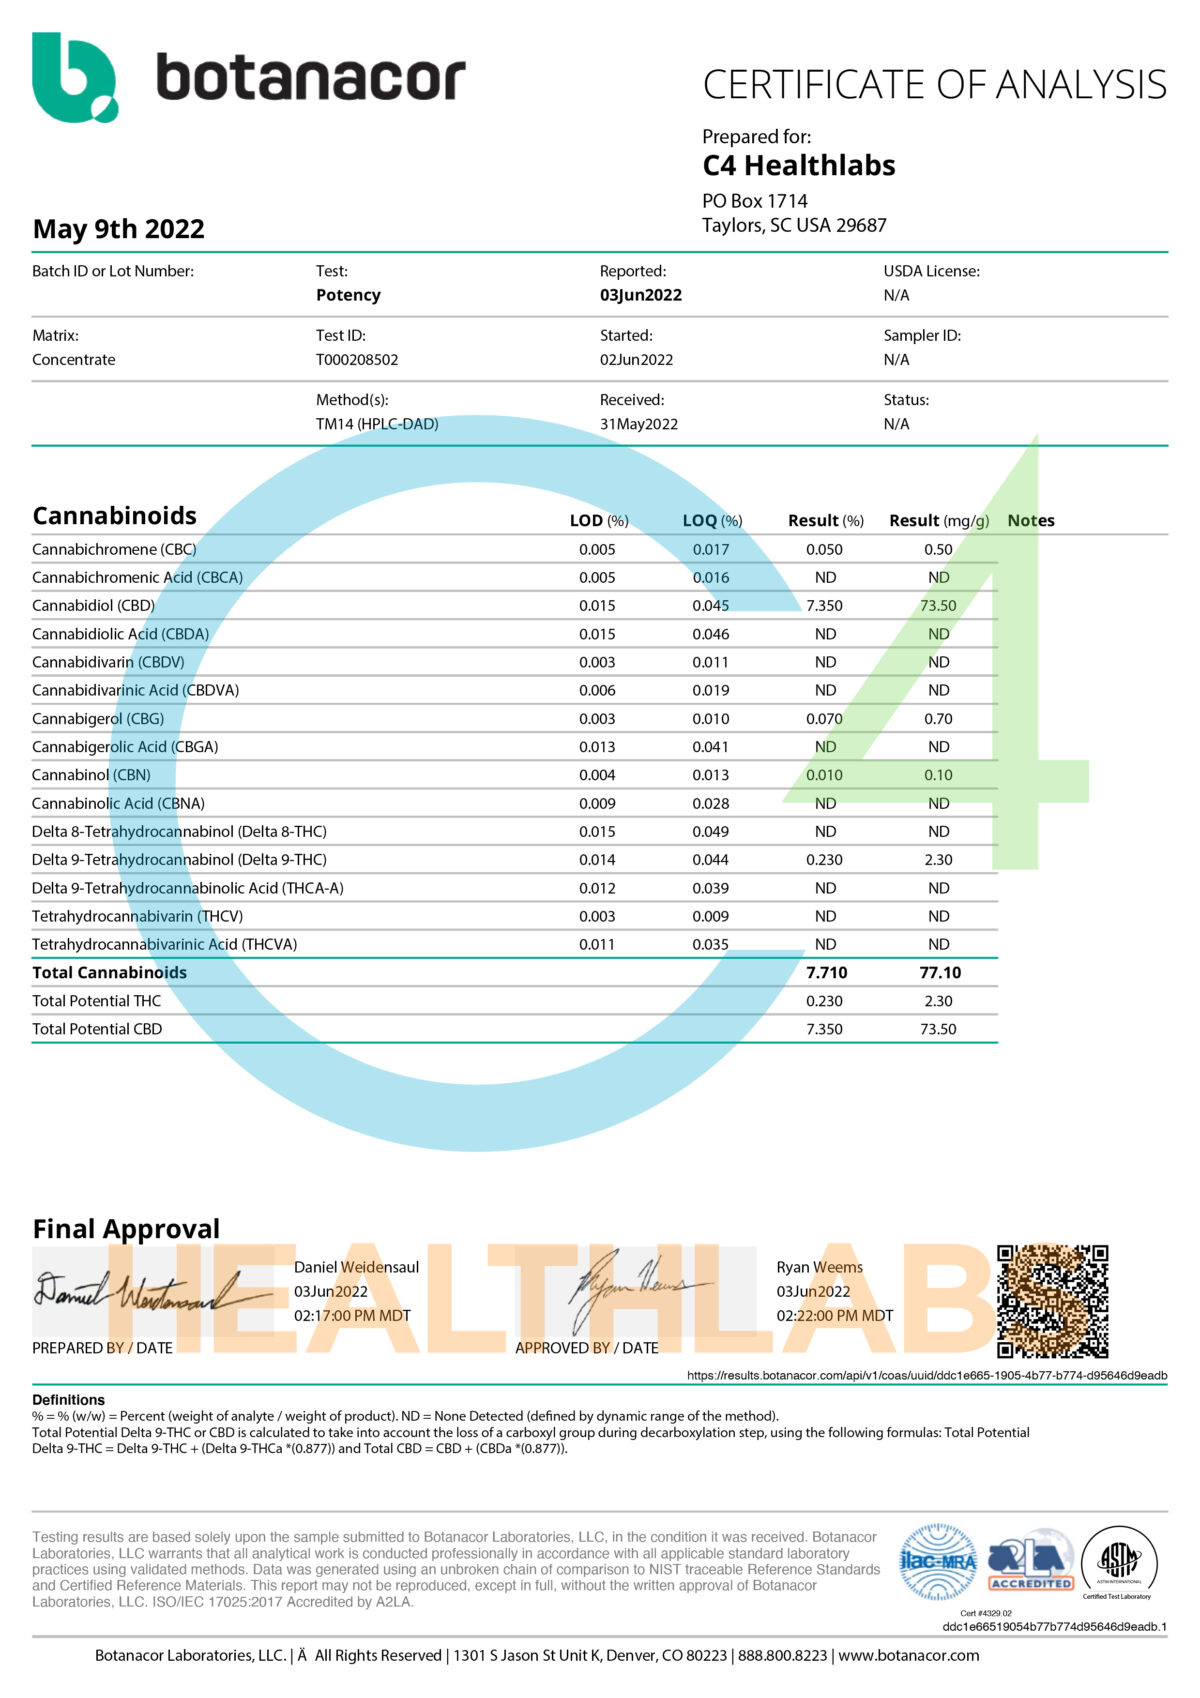 c4 healthlabs full spectrum cbd certificate of analysis